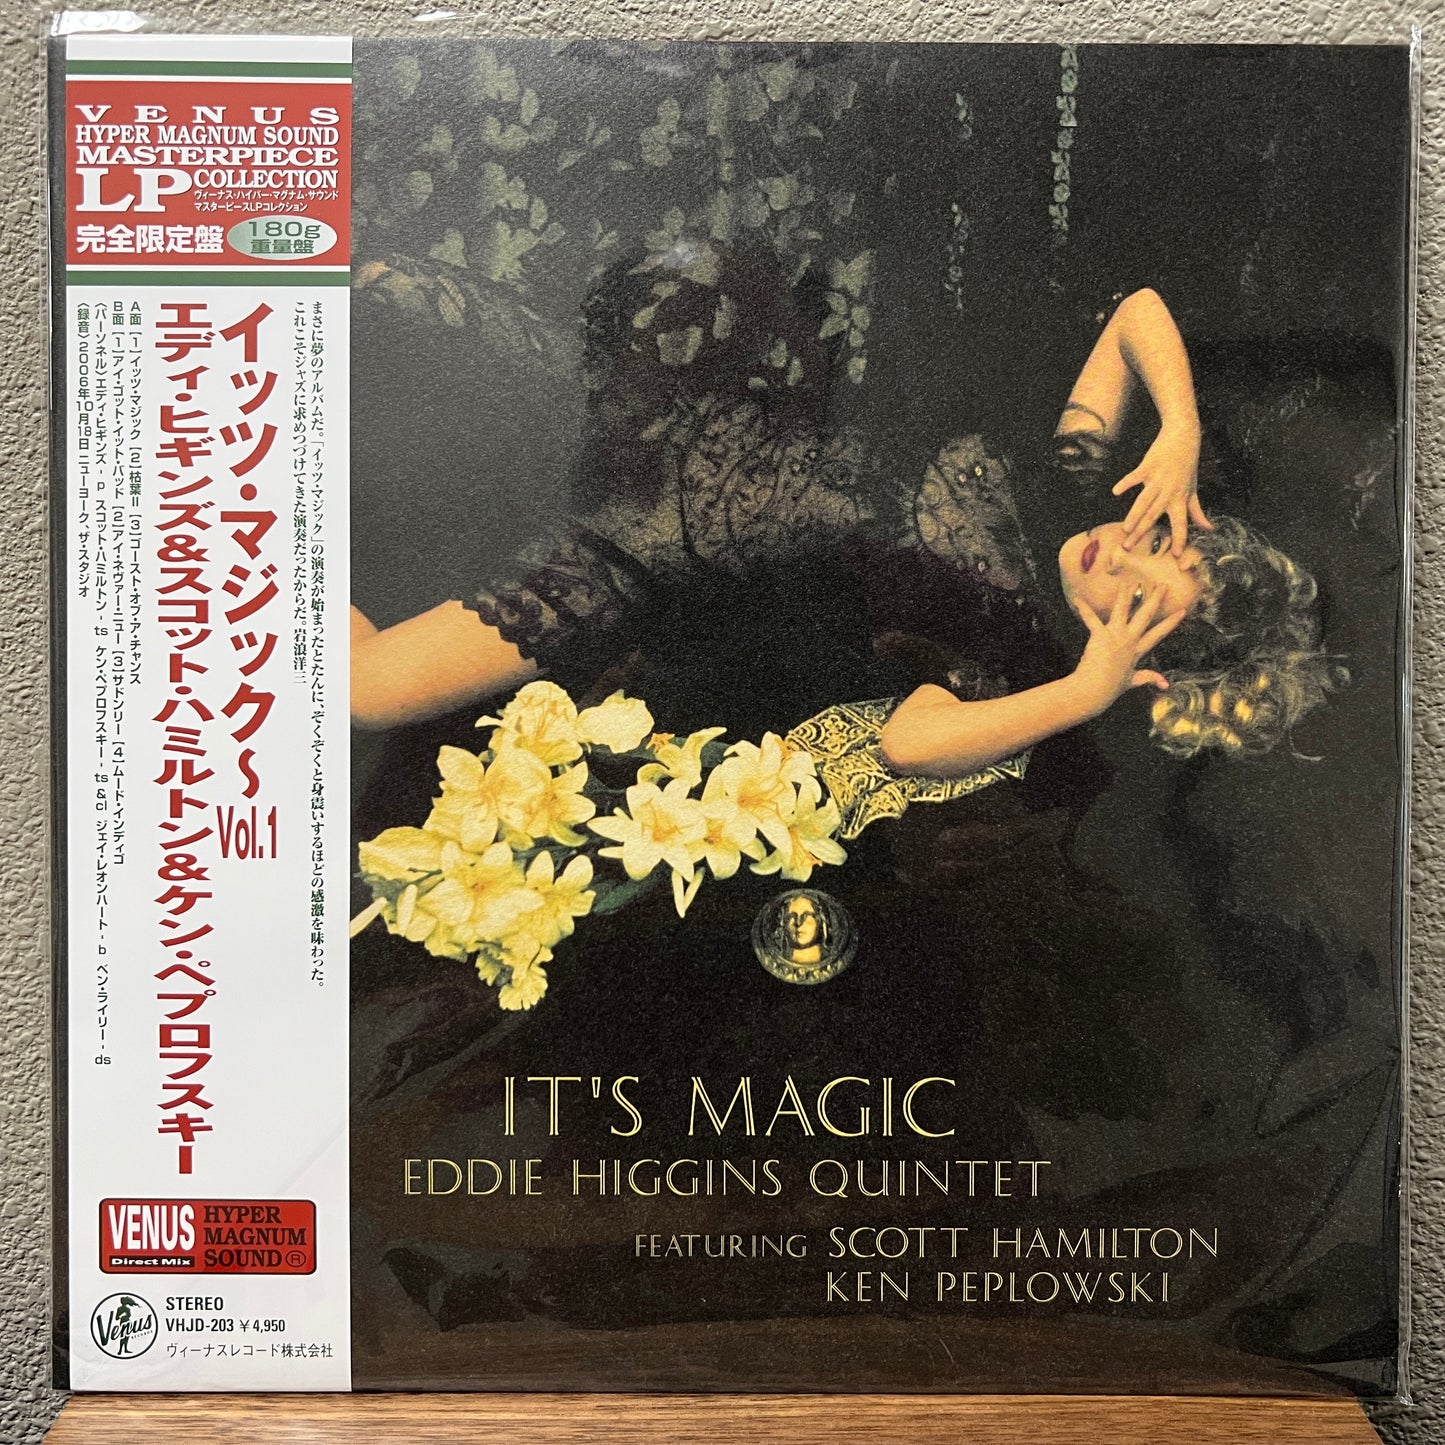 Eddie Higgins & Scott Hamilton & Ken Peplowski - It's Magic - Japanese Import LP